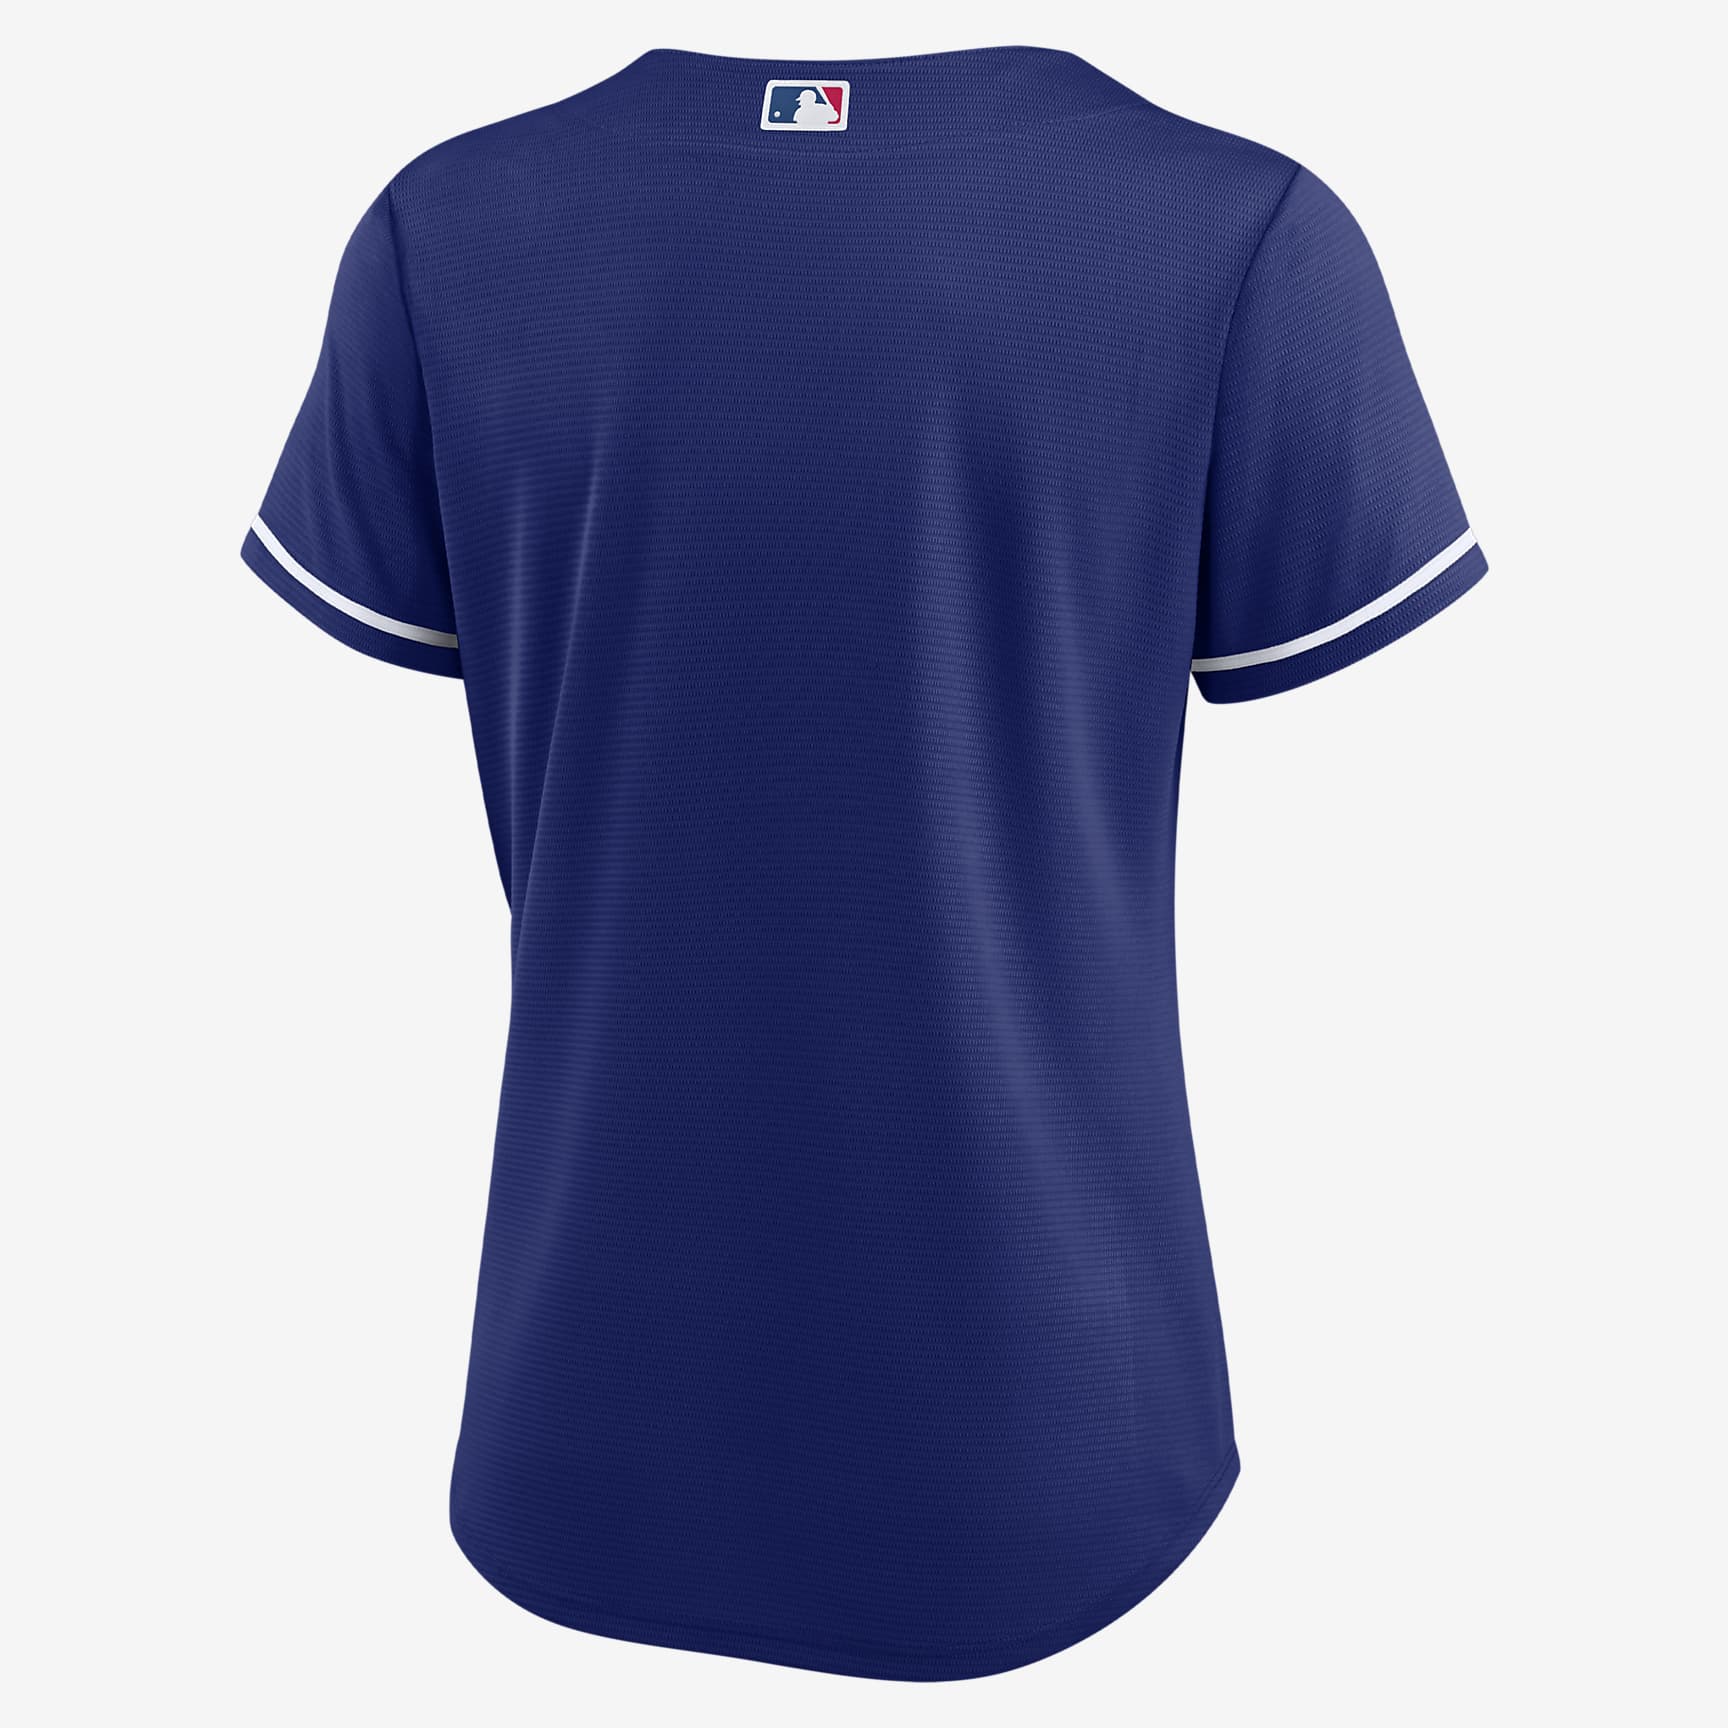 Jersey de béisbol Replica para mujer MLB Los Angeles Dodgers. Nike.com